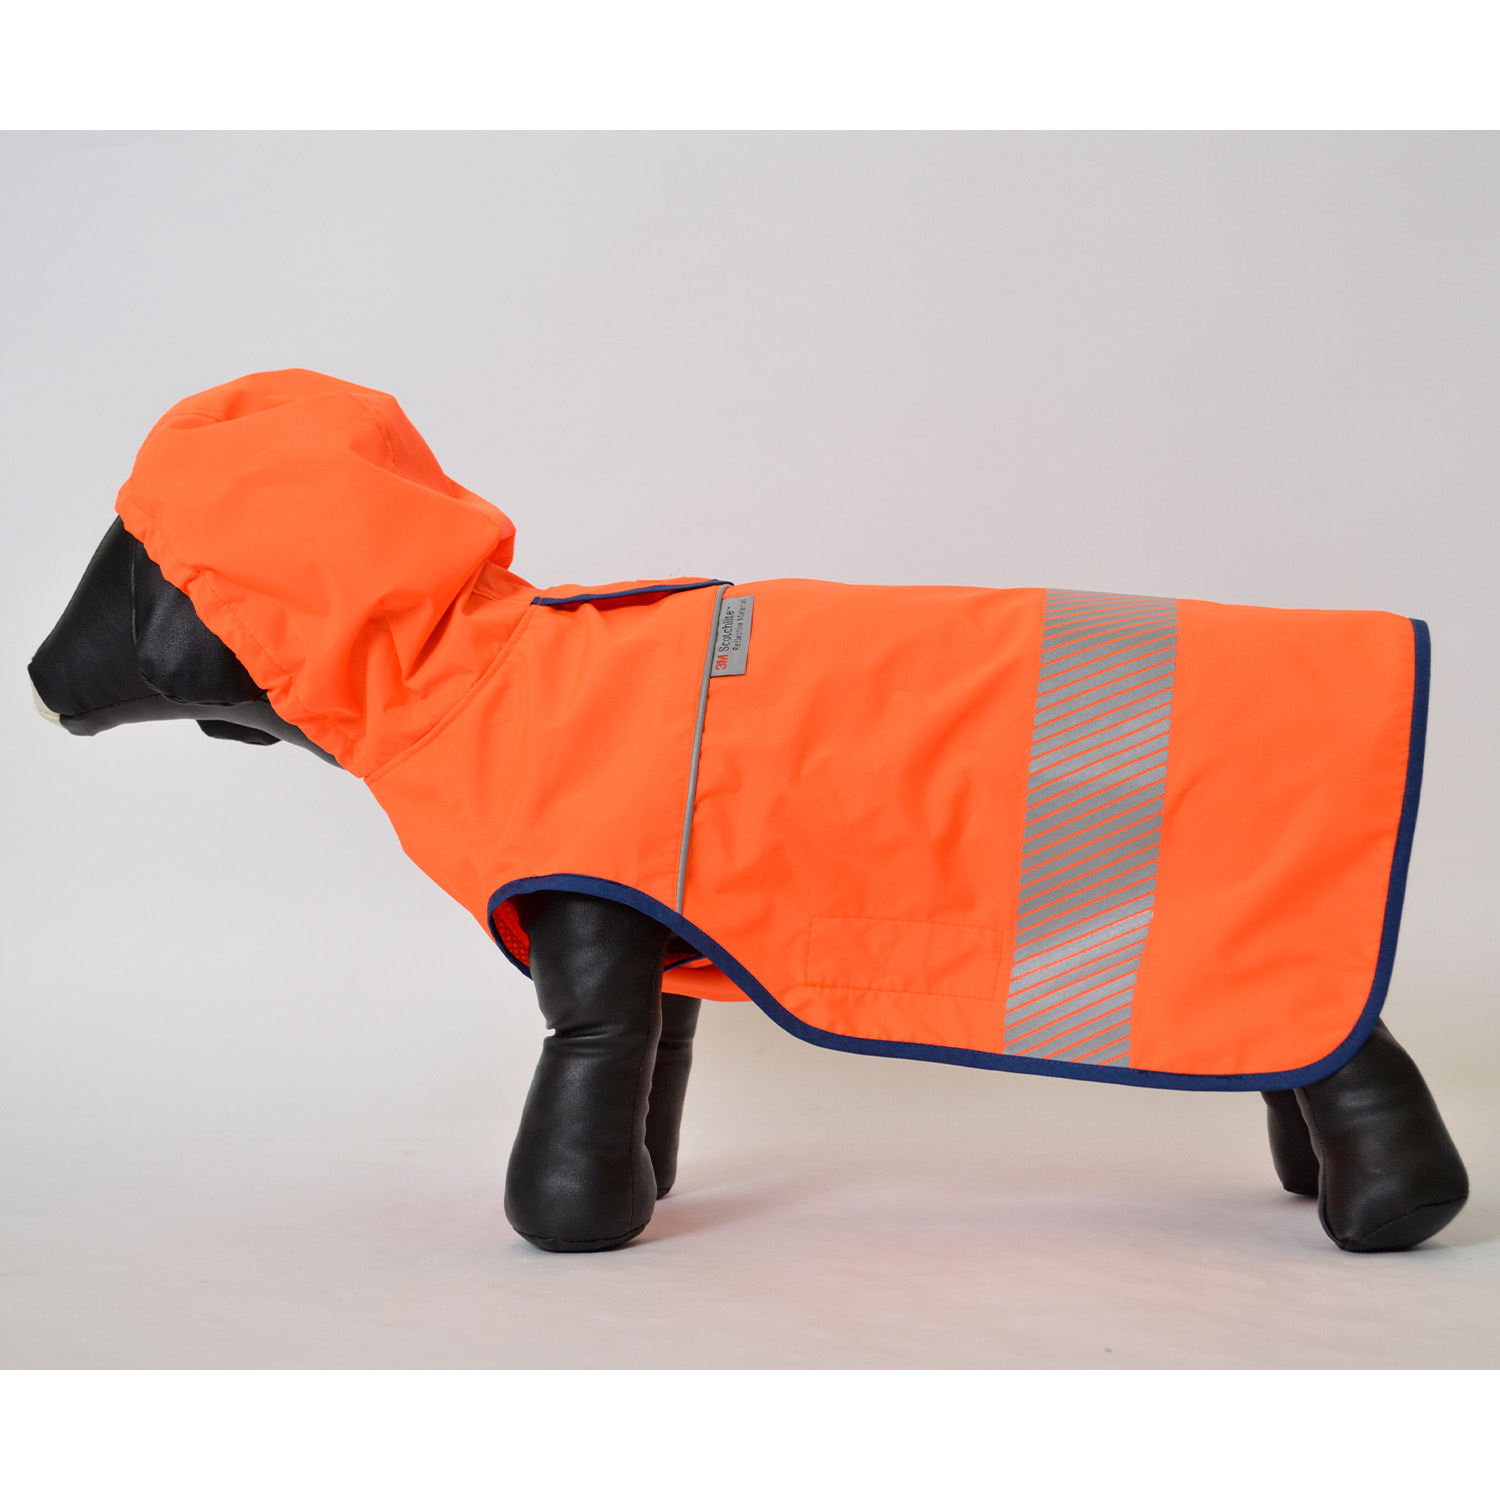 小型犬用レインコート(DG2100) 耐水圧 透湿性 安全服 反射材 蛍光生地 日本製 作業服